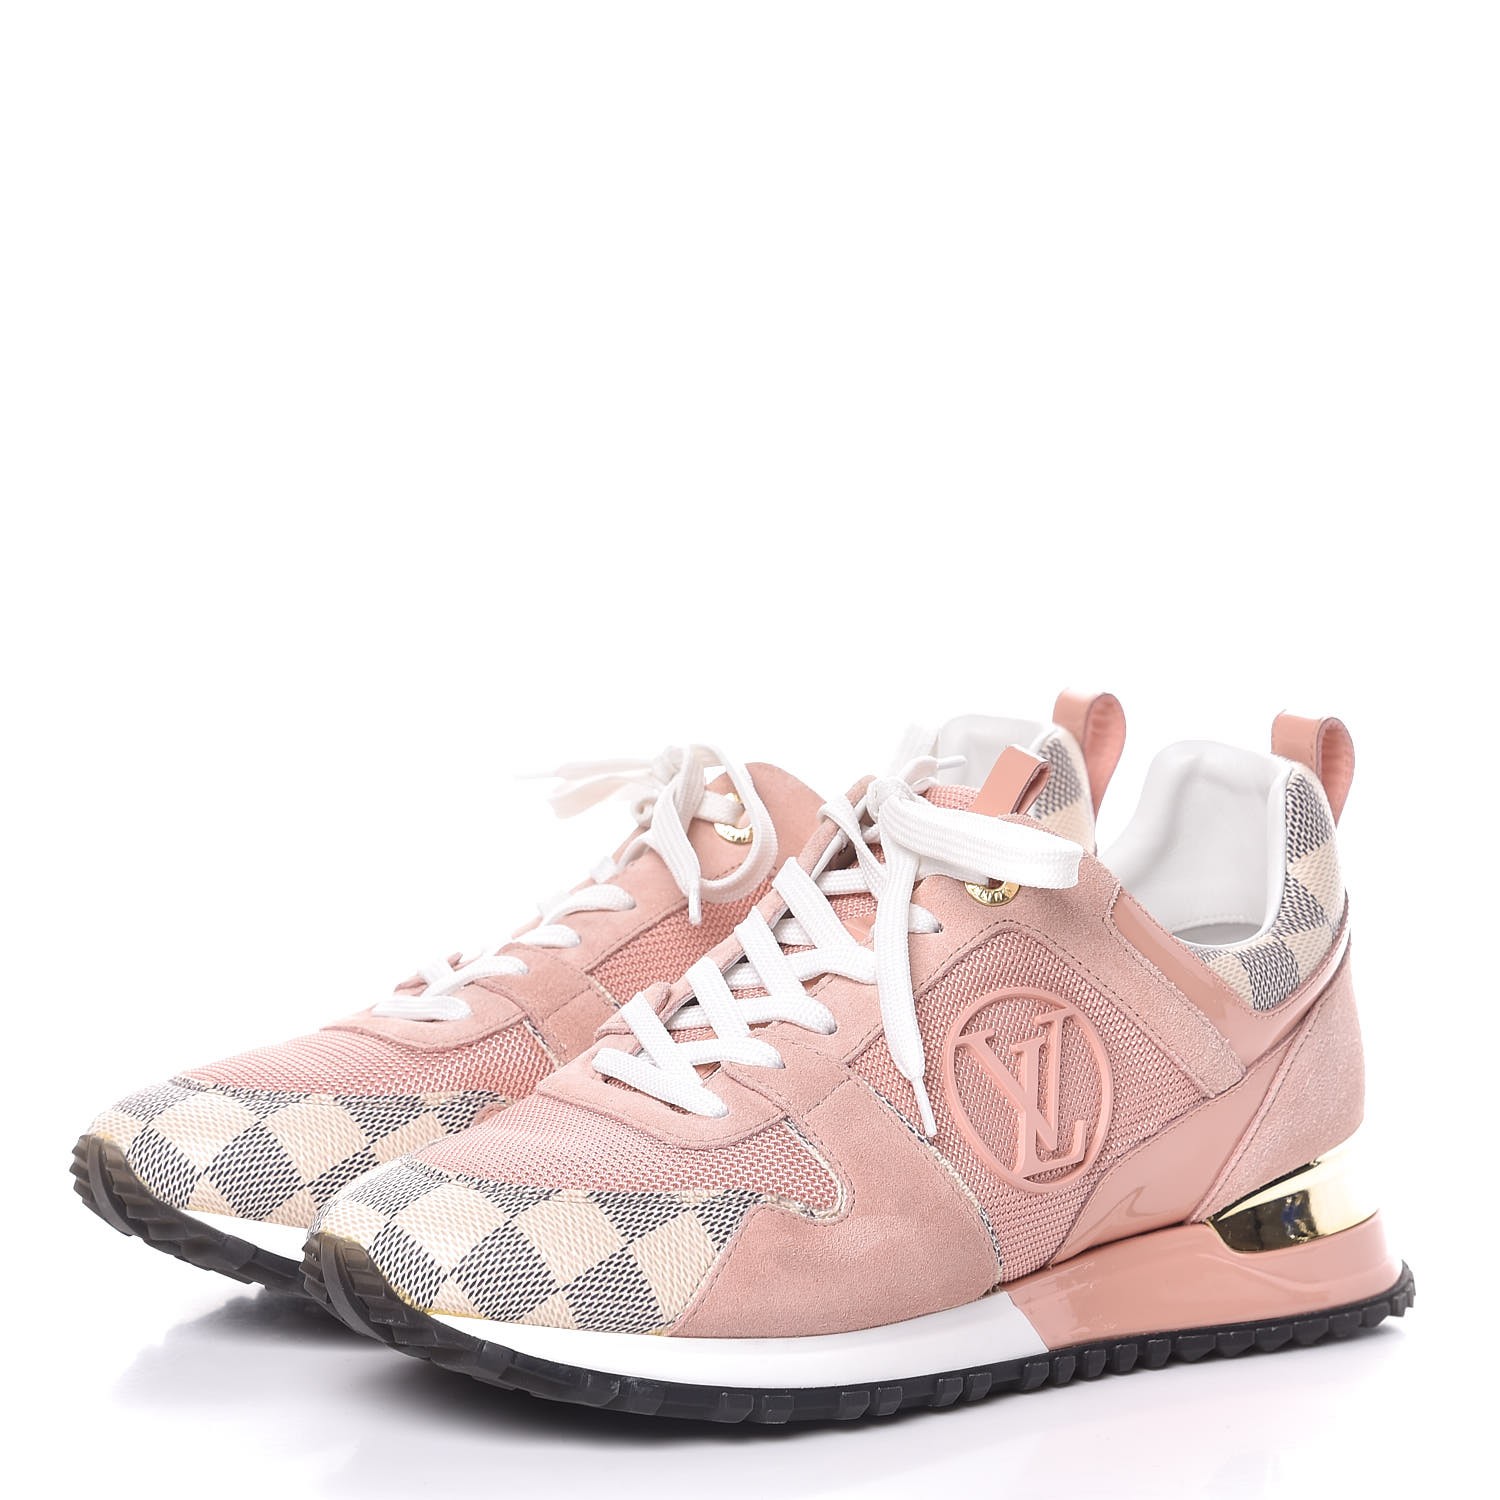 LOUIS VUITTON Damier Azur Suede Run Away Sneakers 38.5 Pink 336870